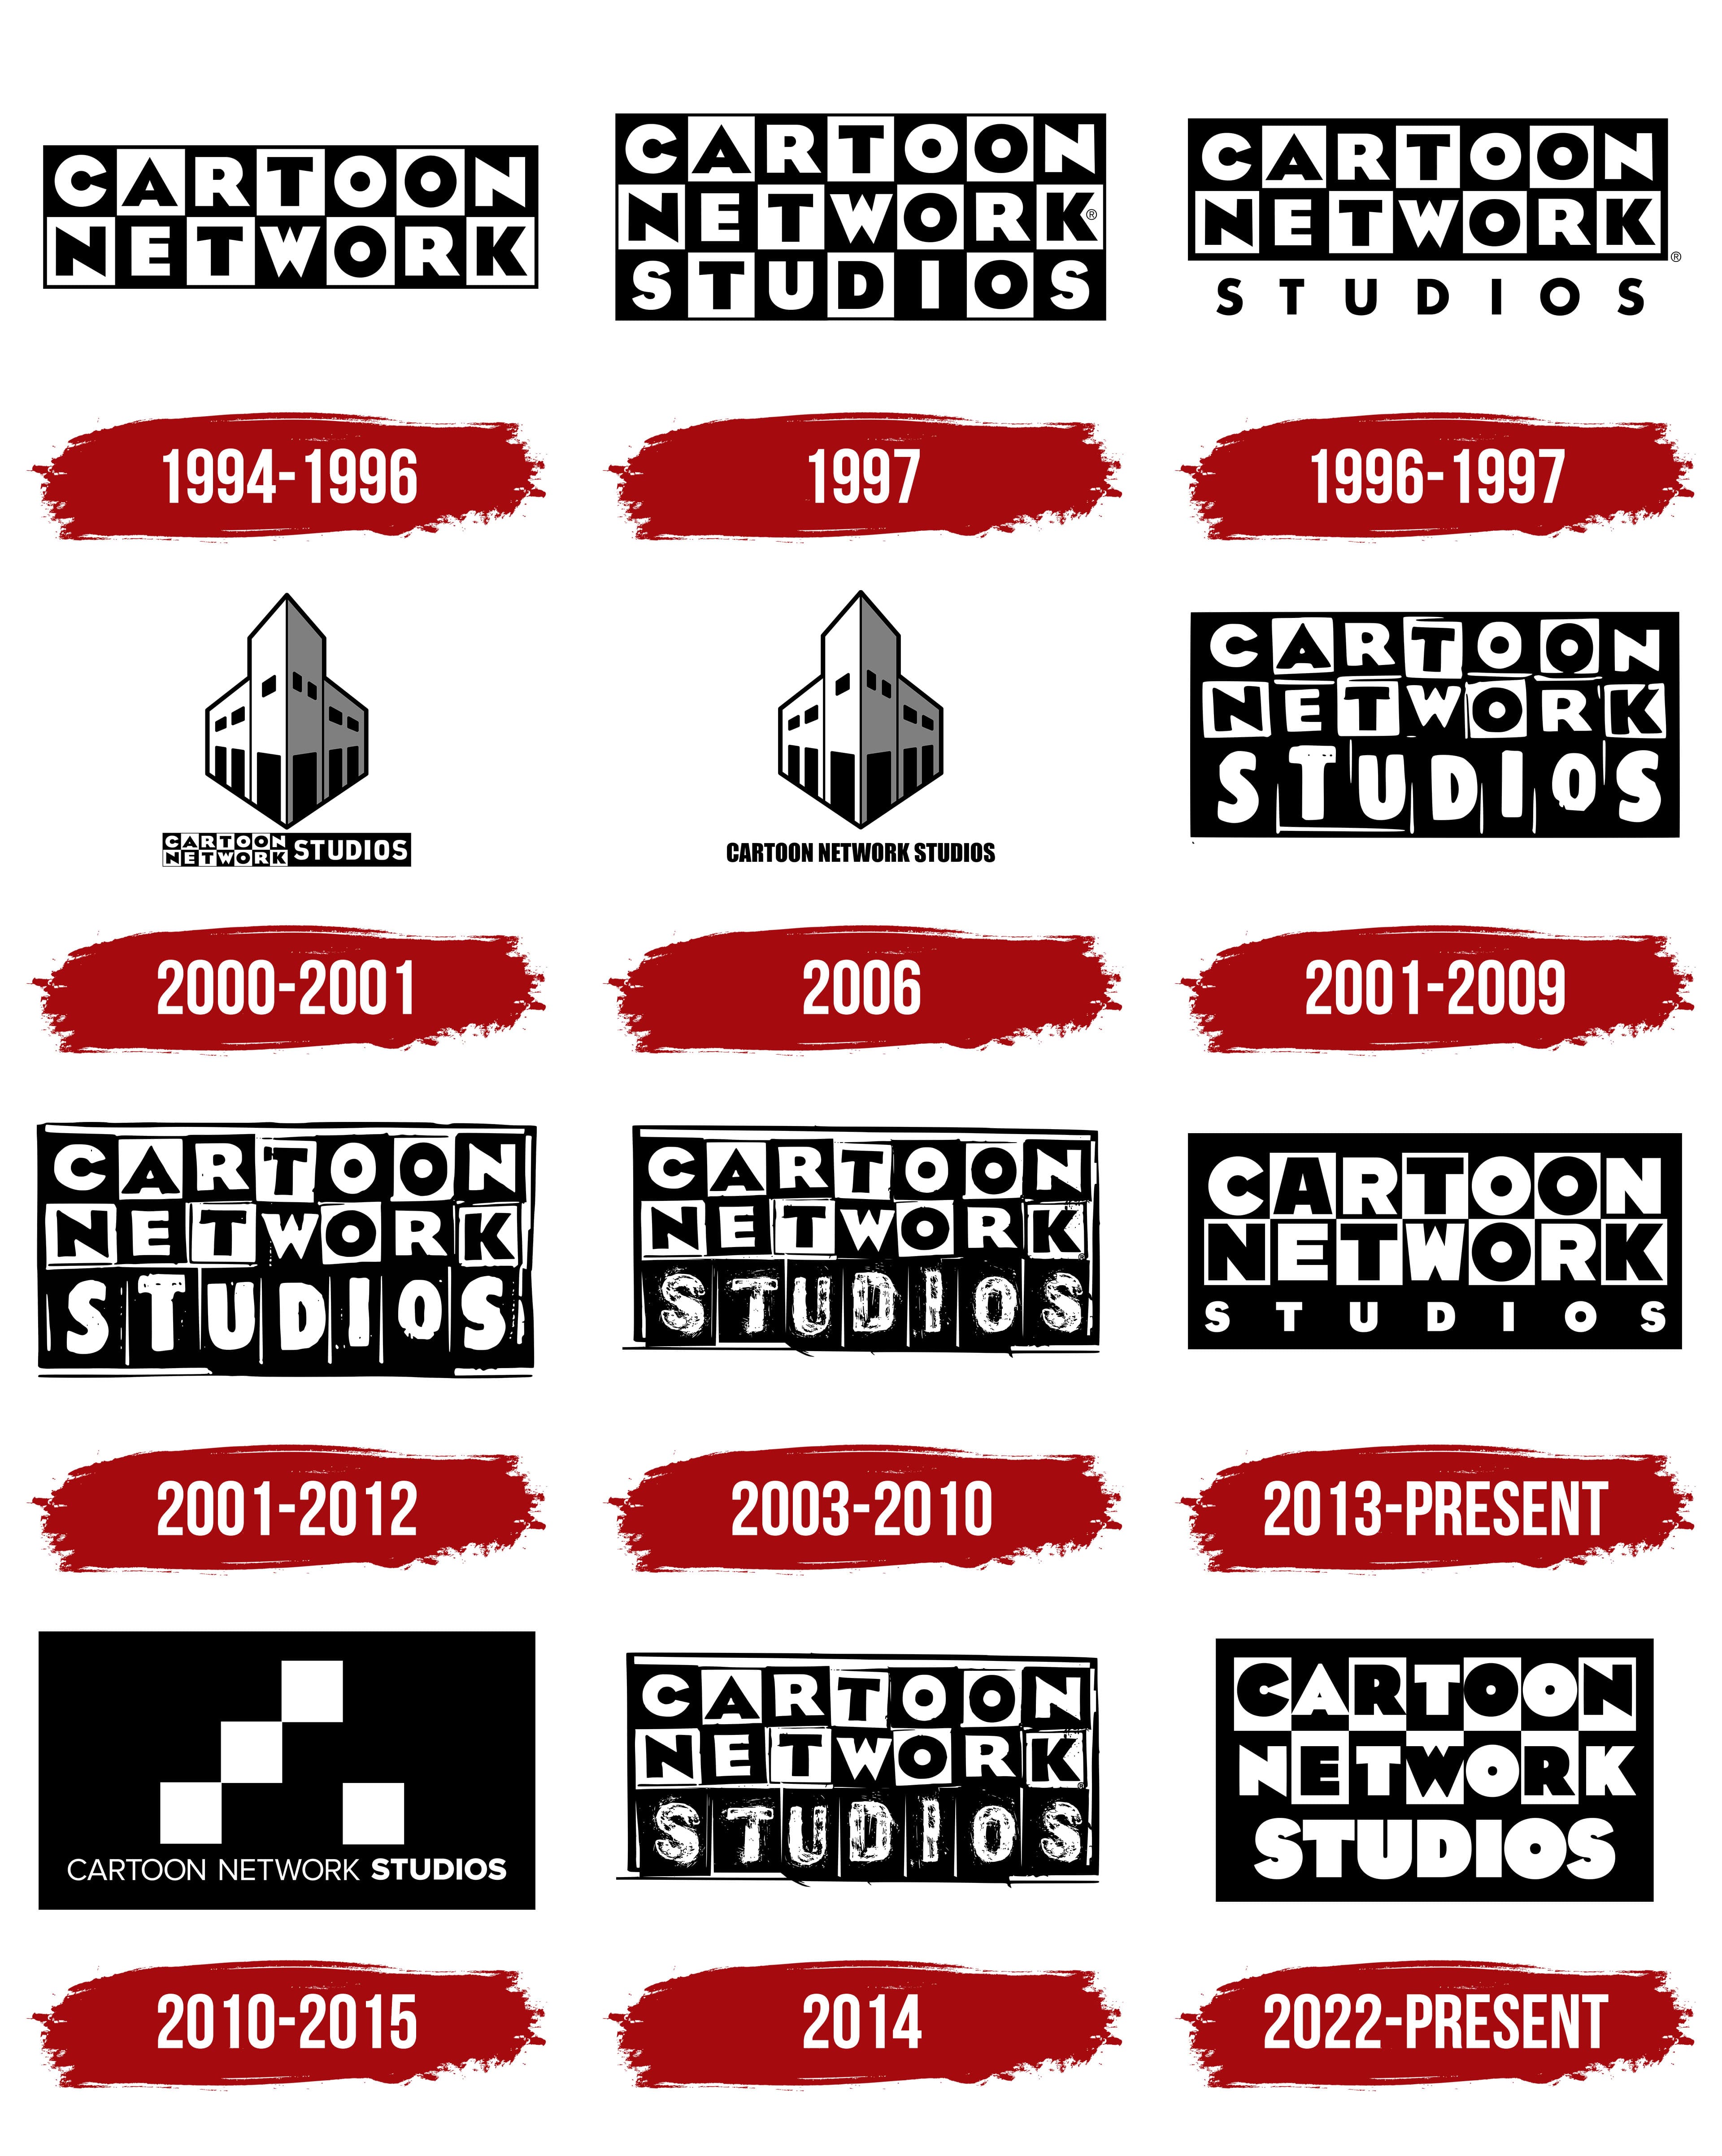 Cartoon Network in 2003 - Web Design Museum